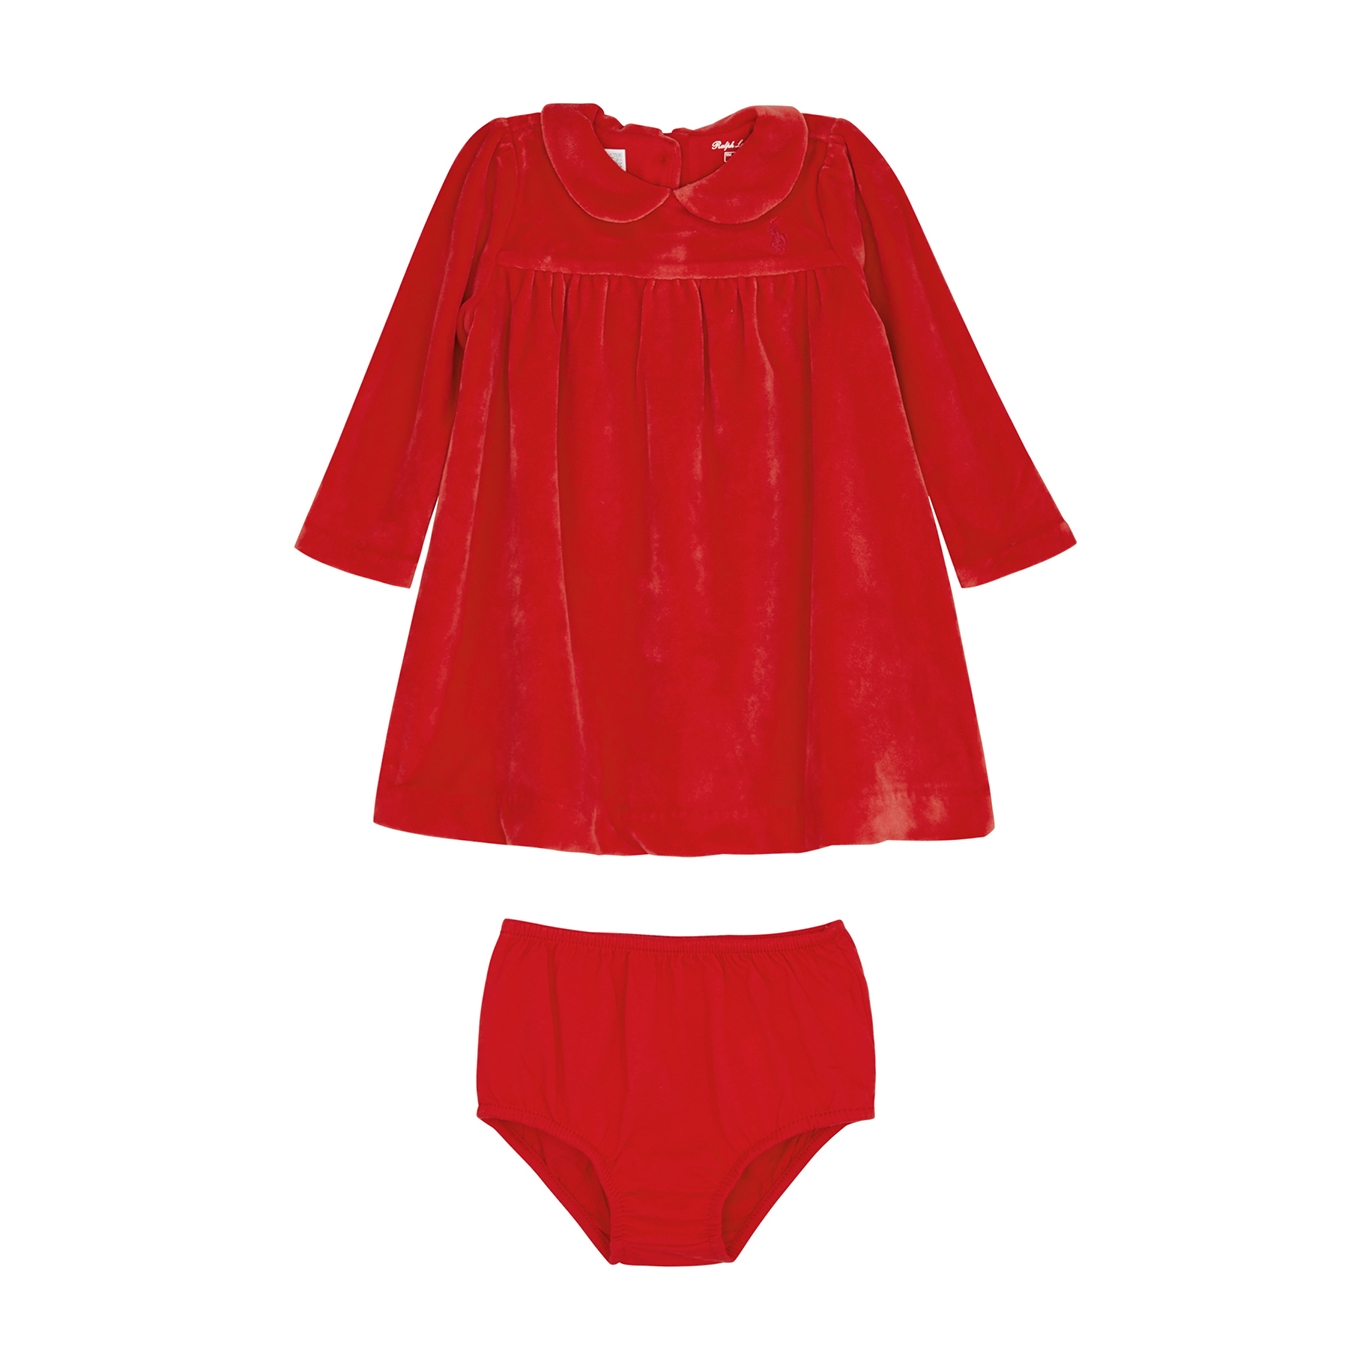 Polo Ralph Lauren Kids Velvet Dress And Bloomers Set (3-24 Months) - Red - 6 Months